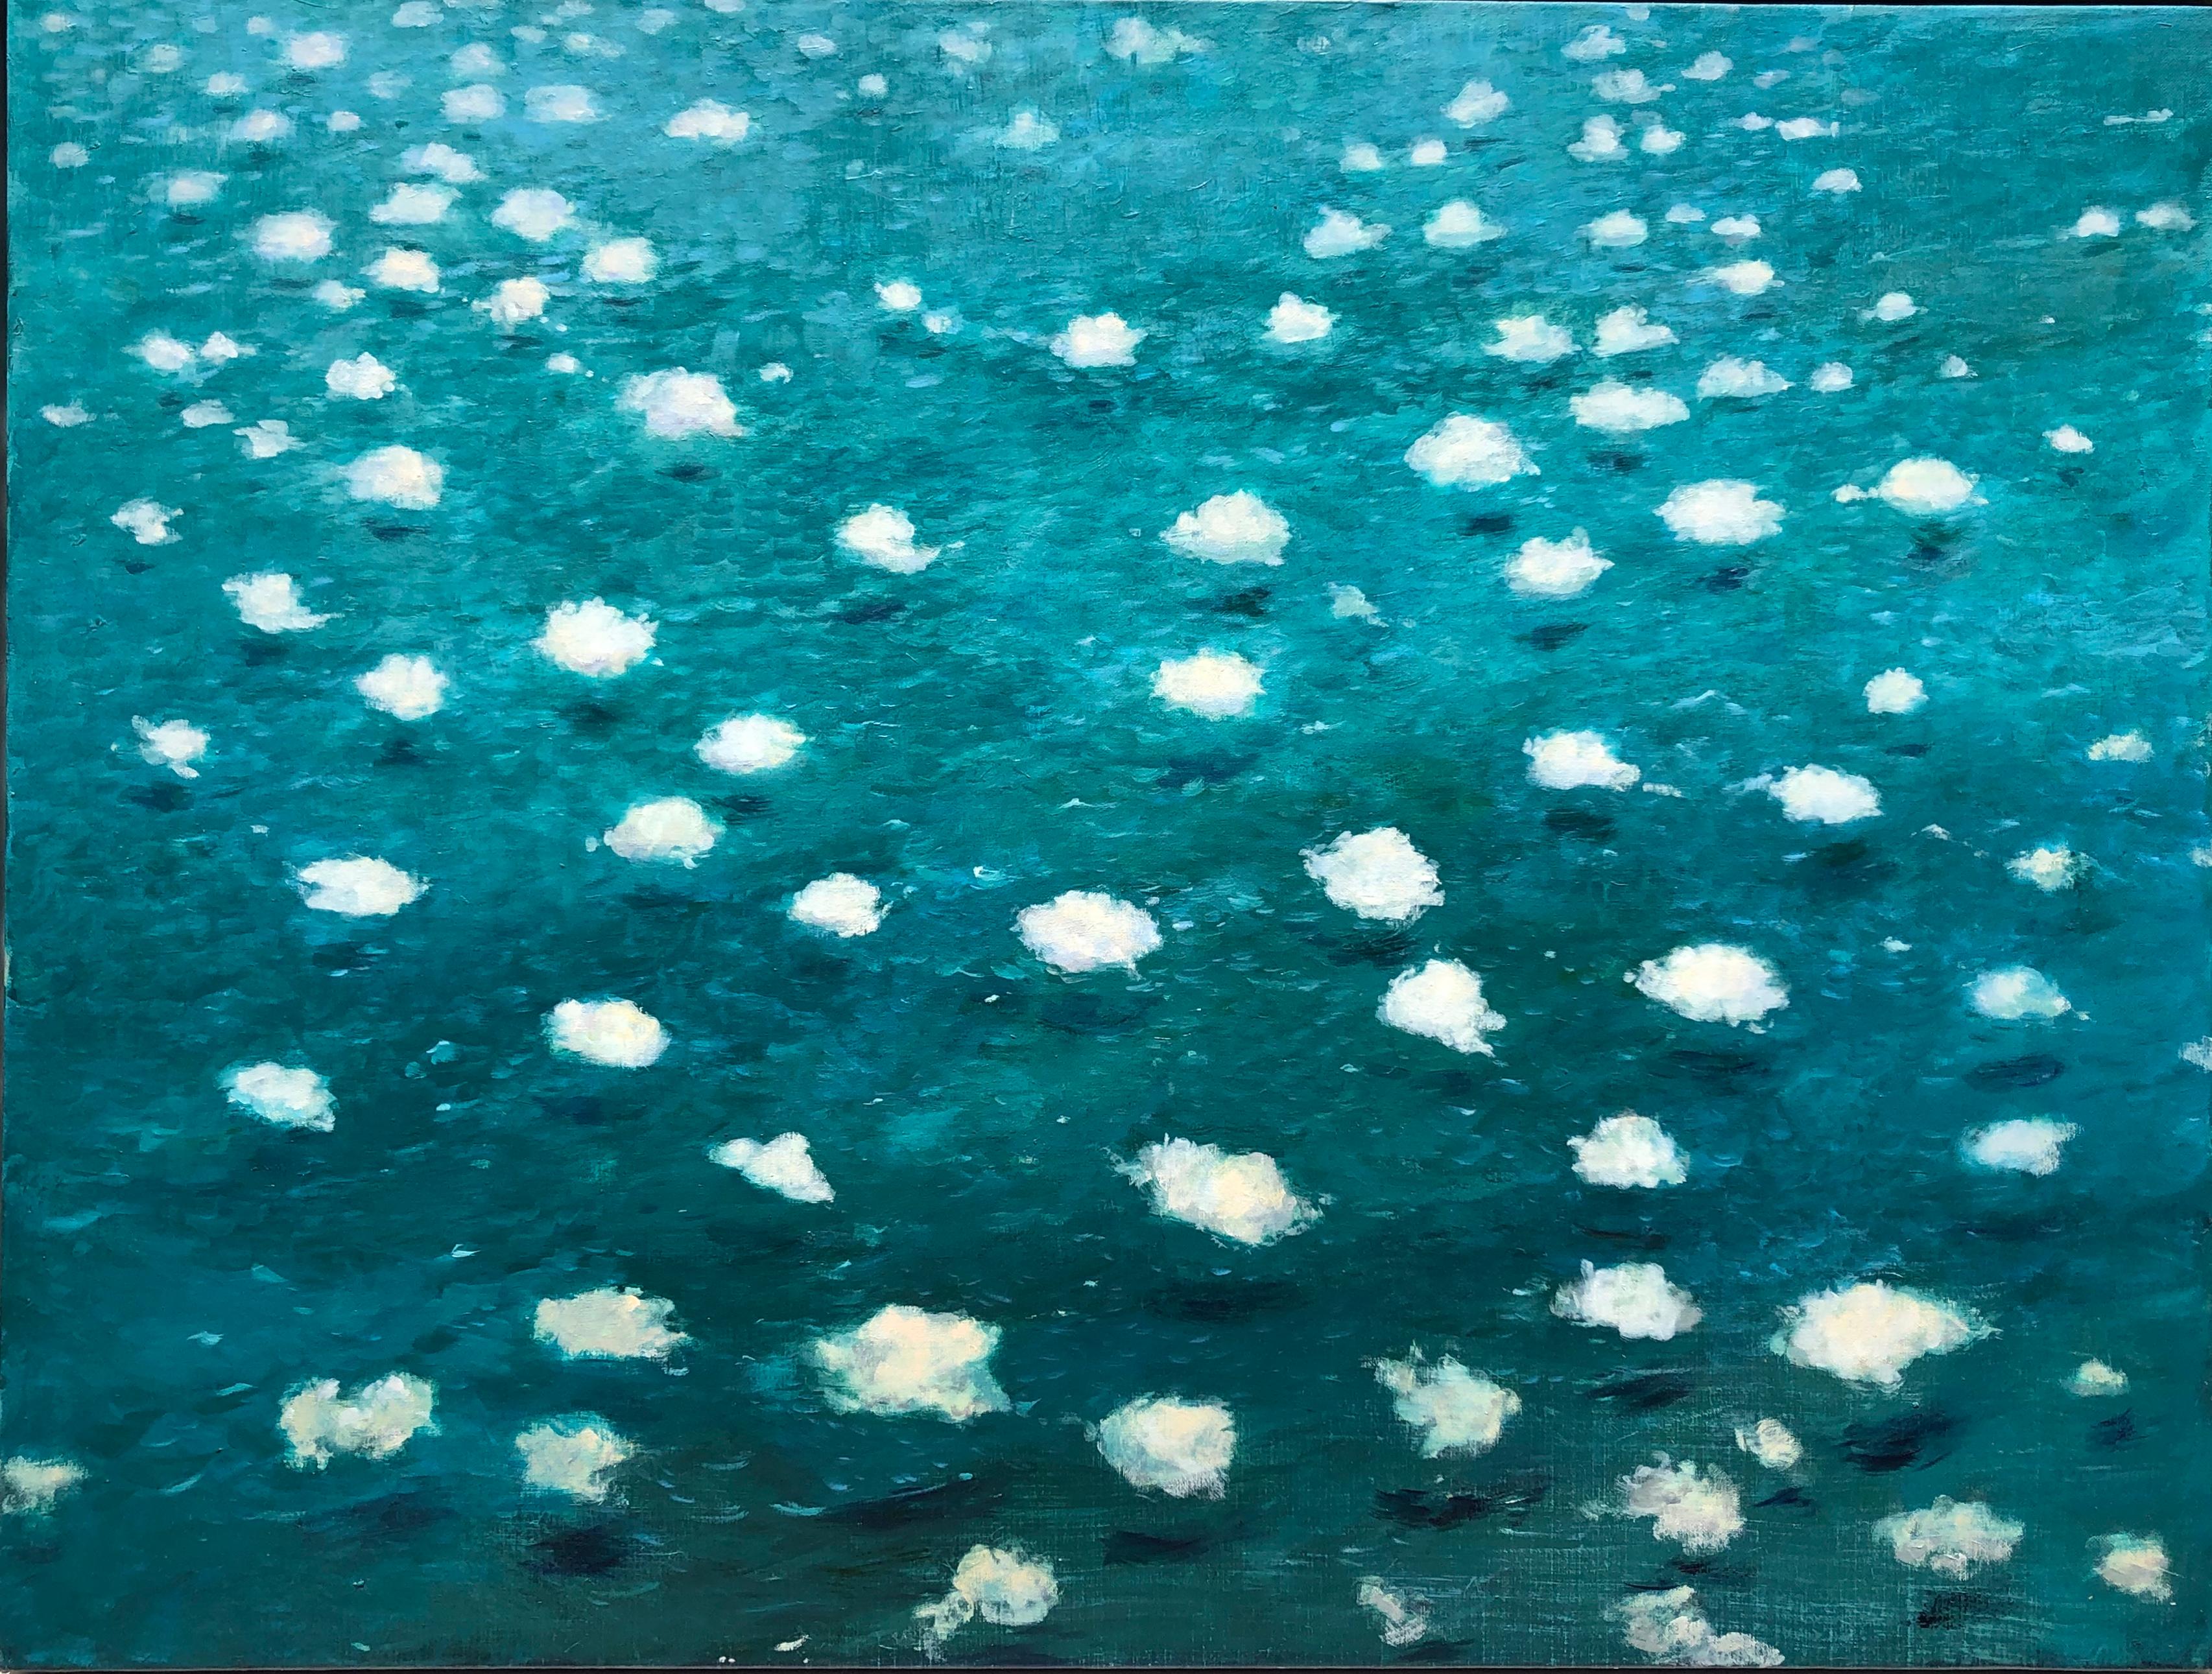 Wendy Garner Landscape Painting - "Clouds"